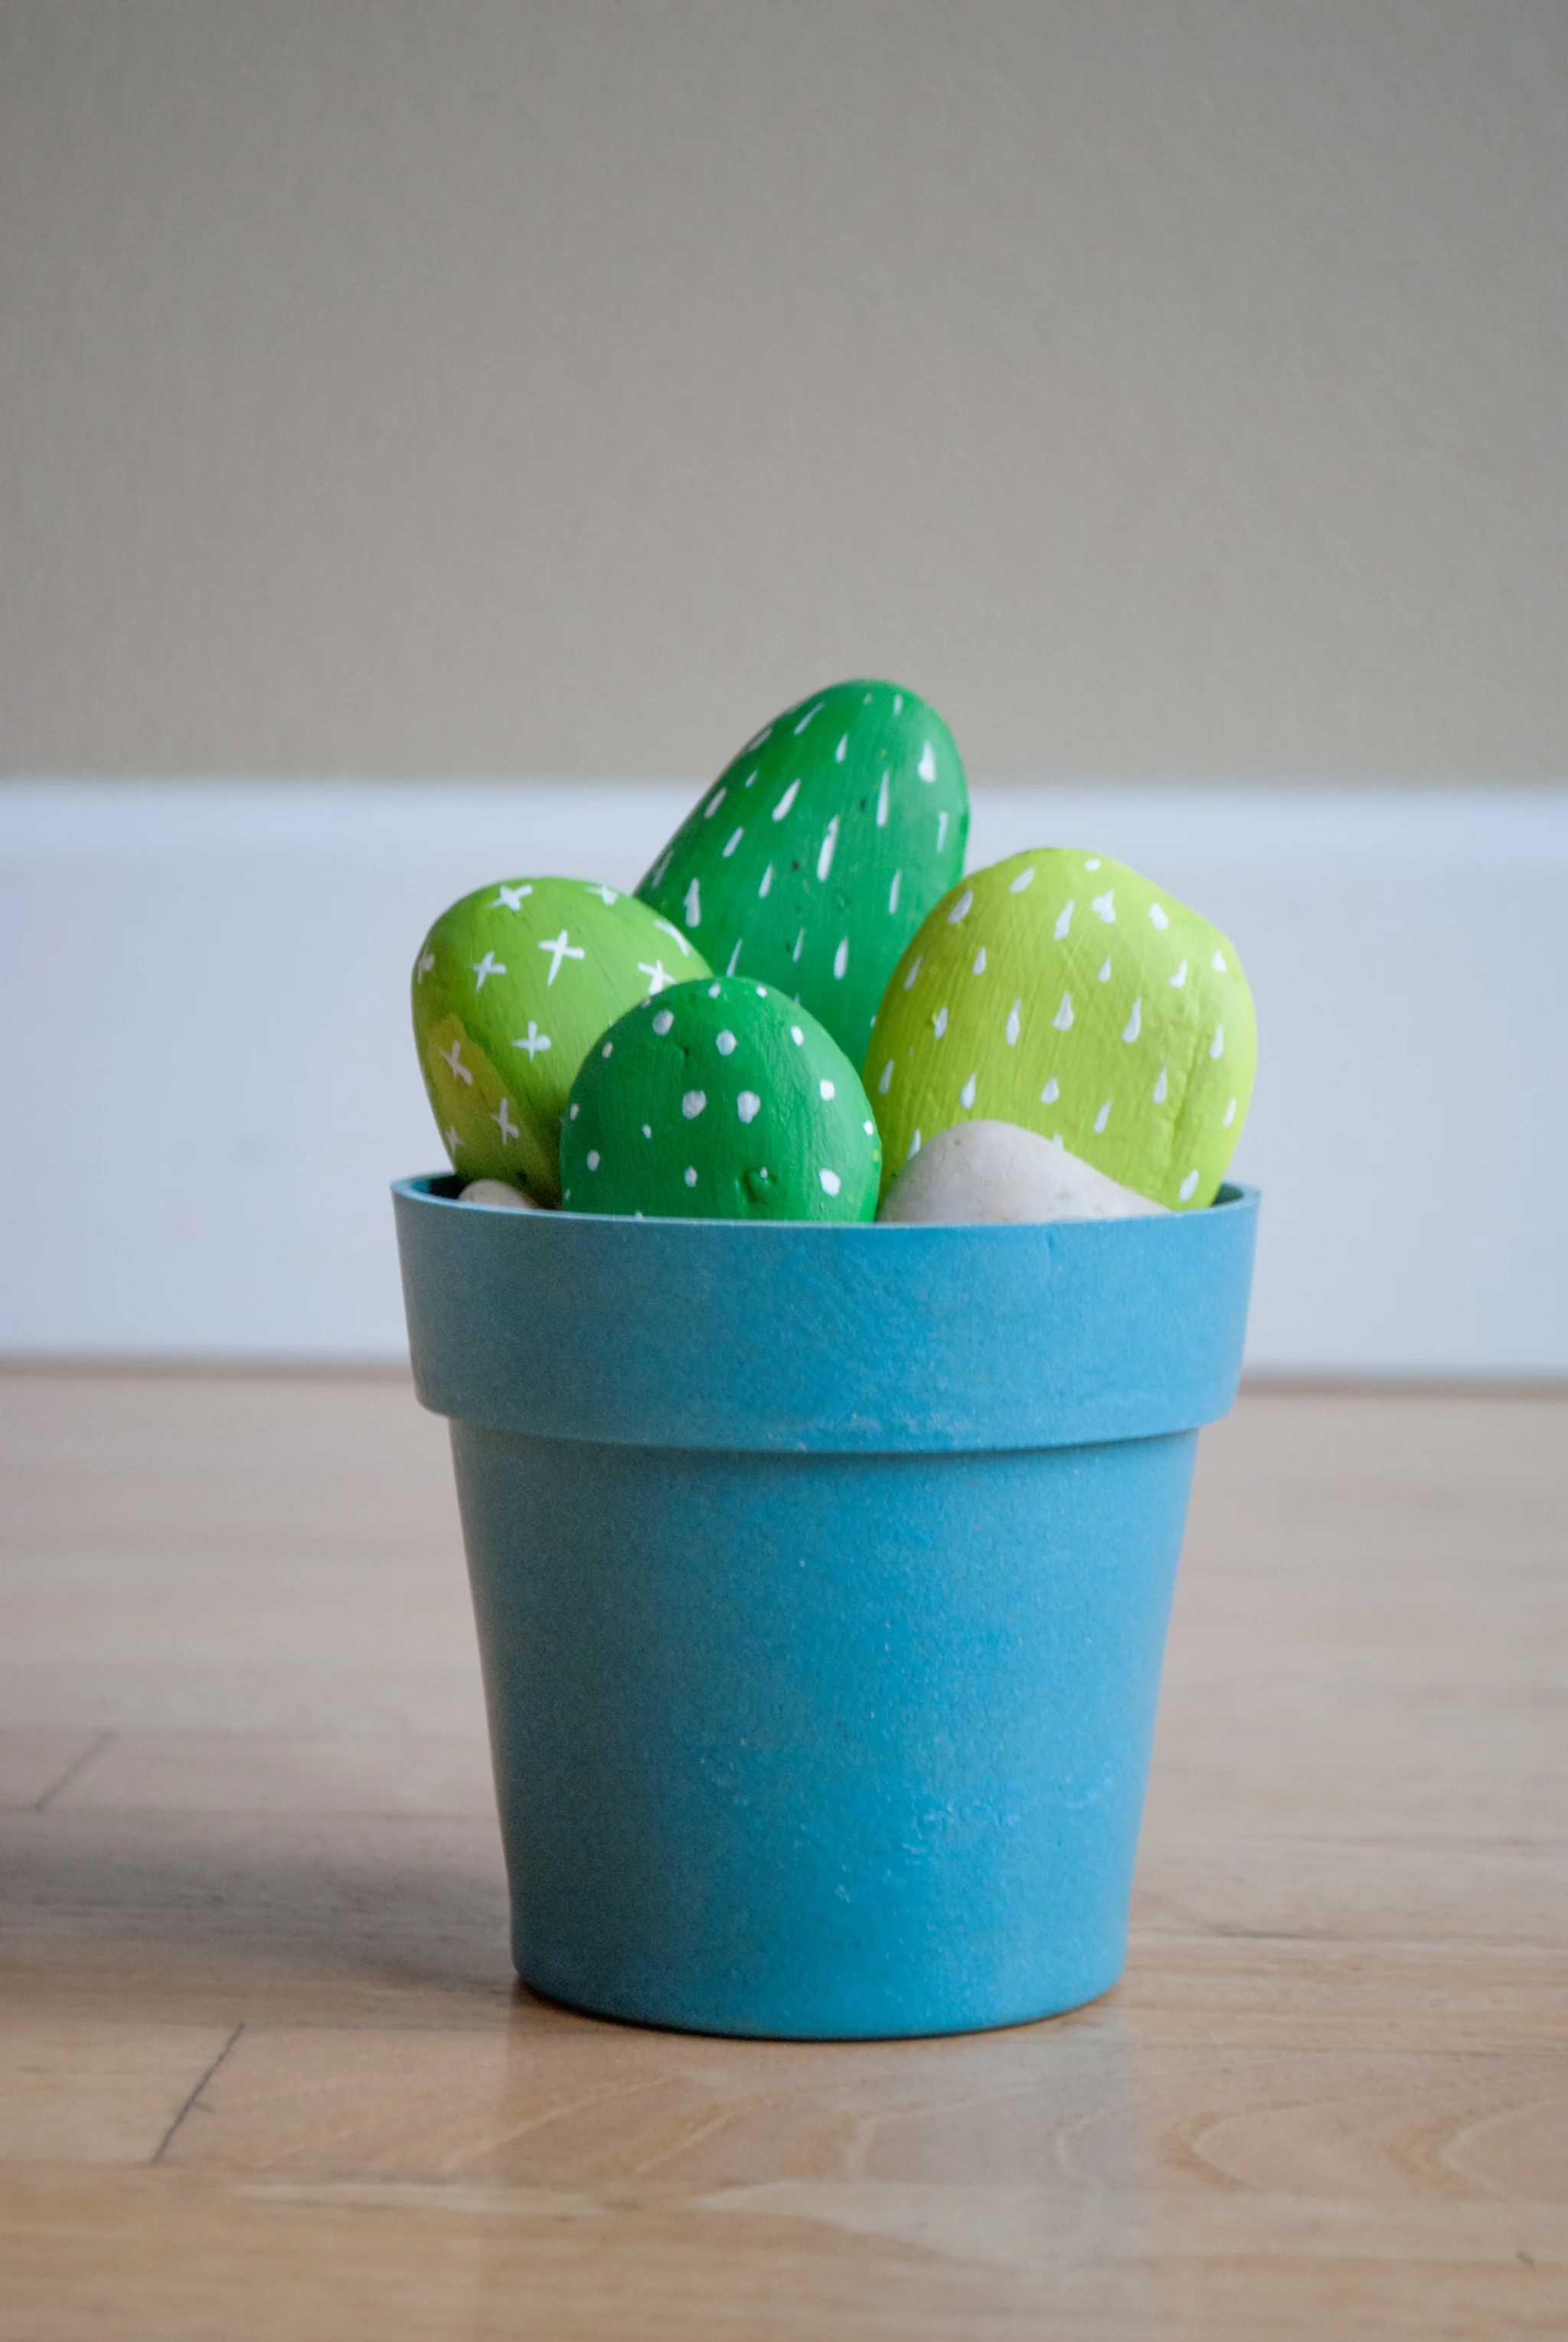 DIY Cactus Rocks Make Your Own Cactus Rock Garden Craft for Kids